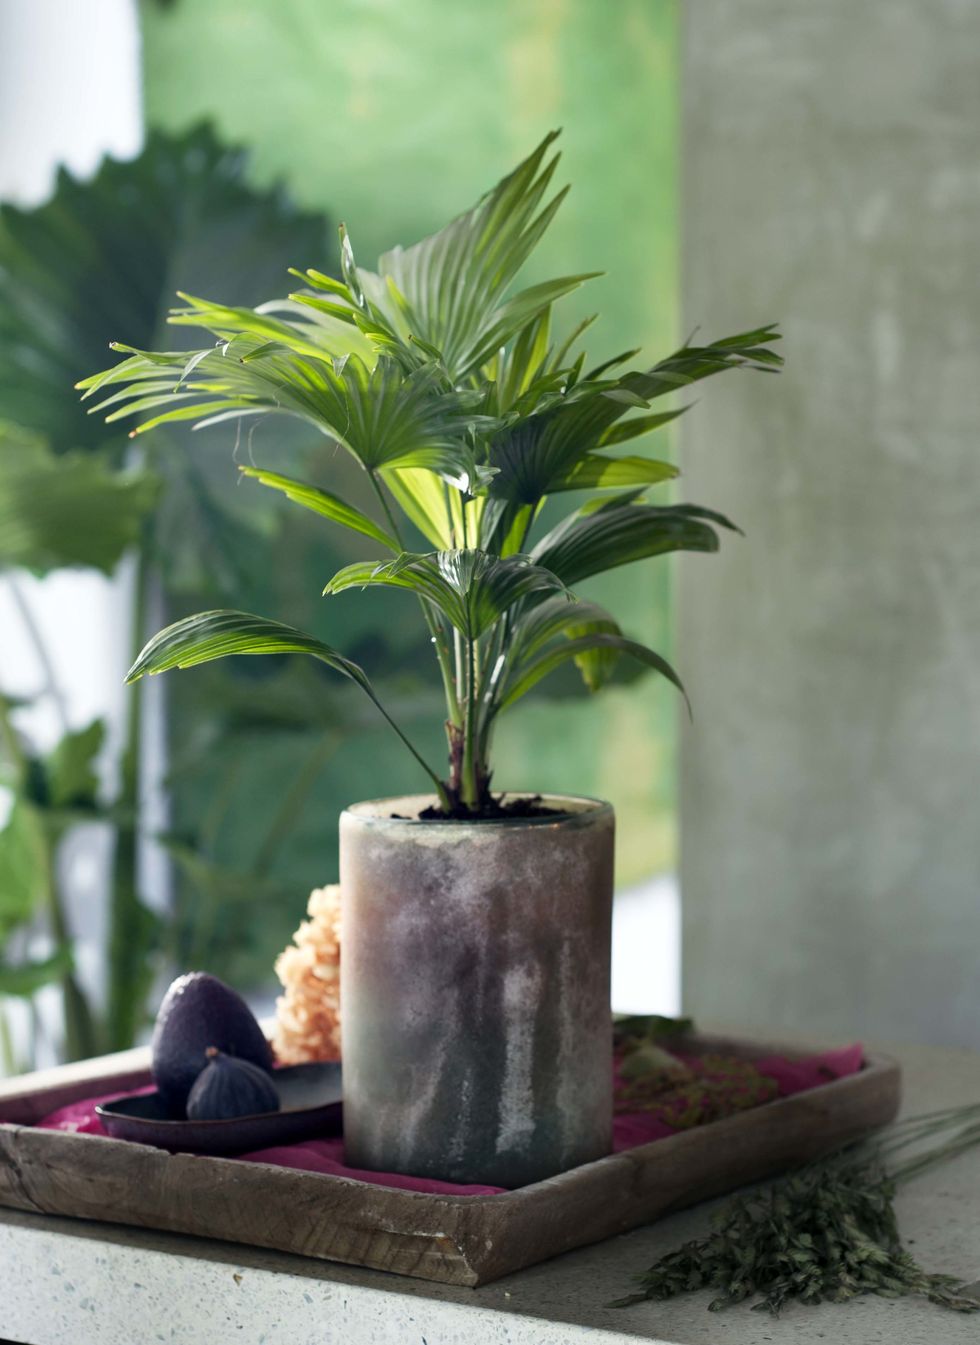 Flowerpot, Botany, Terrestrial plant, Plant stem, Houseplant, Annual plant, Pottery, Vase, Hemp family, 